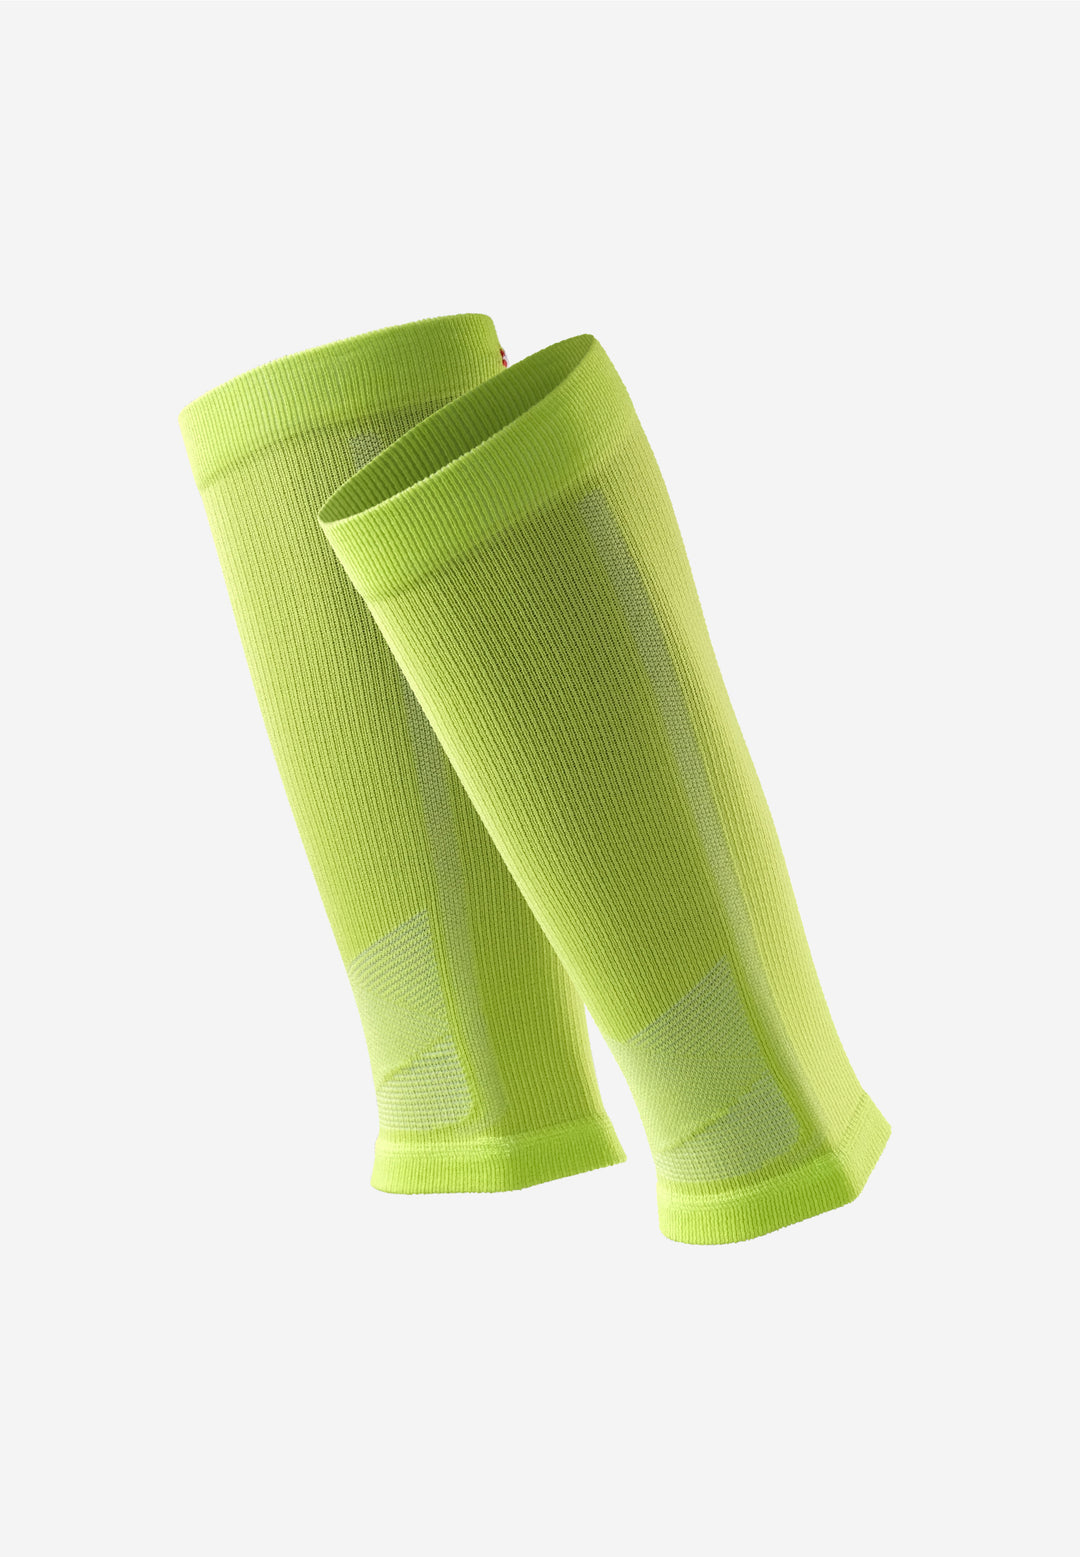  Calf Compression Sleeves,BCDlily Leg Compression Socks